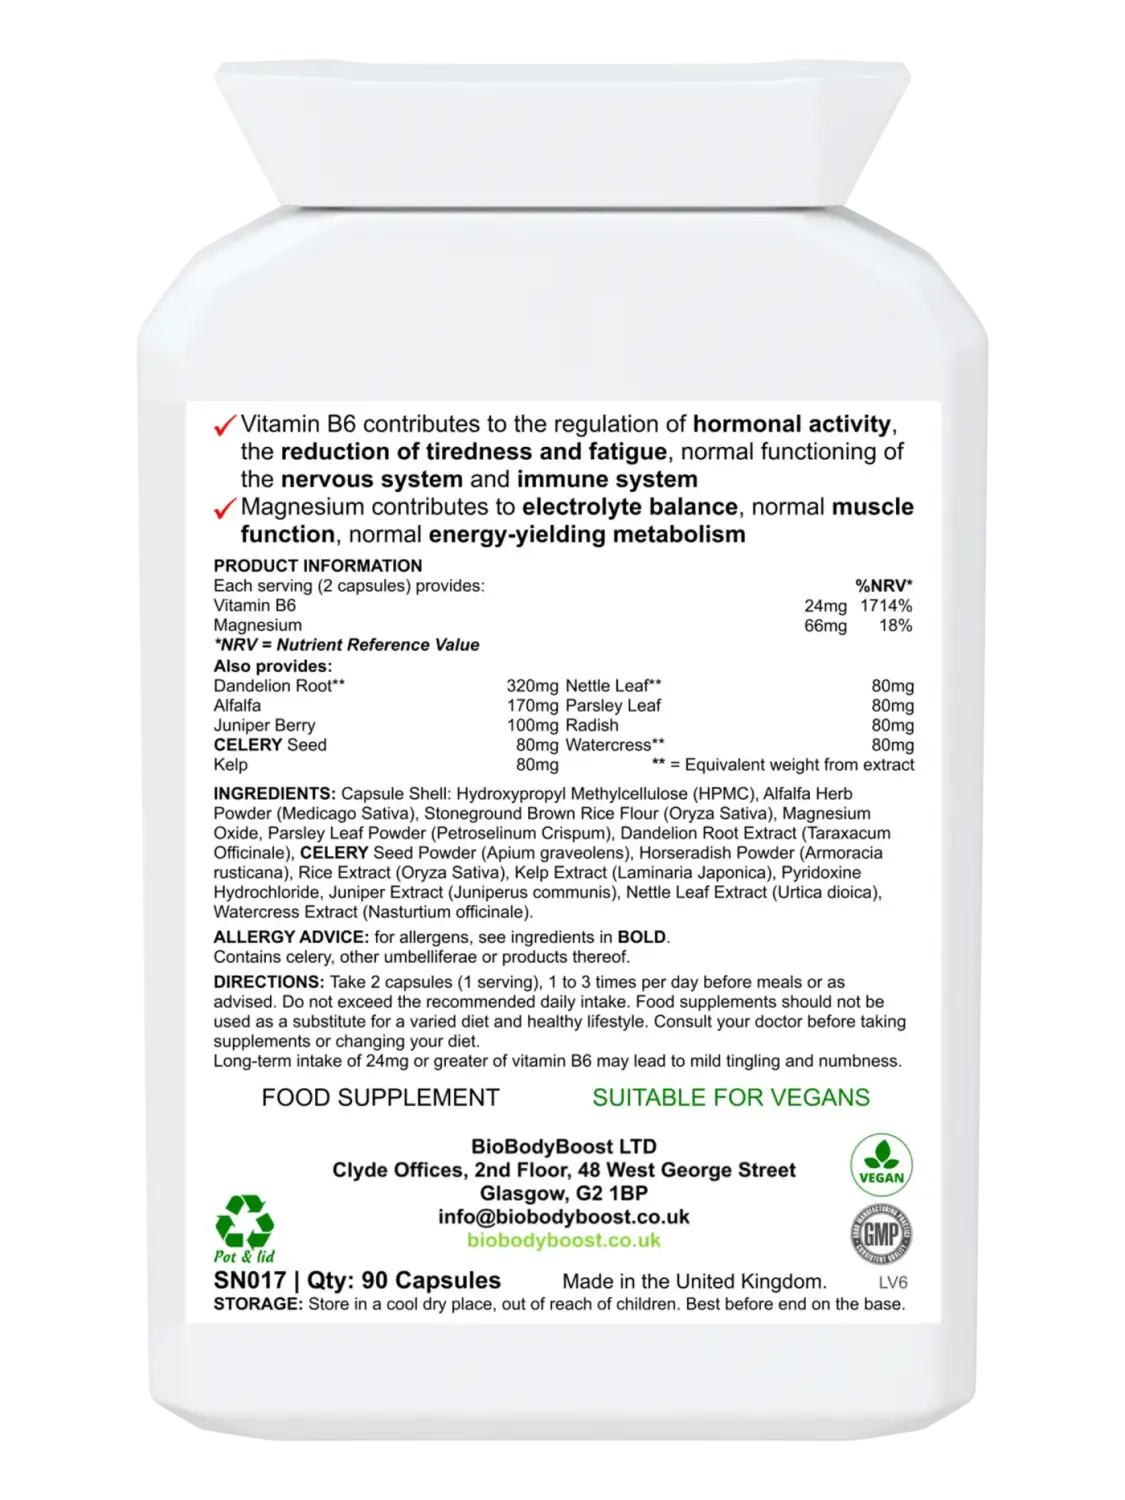 Fluid Balance - Electrolyte Hormone Water Blend Vitamins & Supplements leaf powder